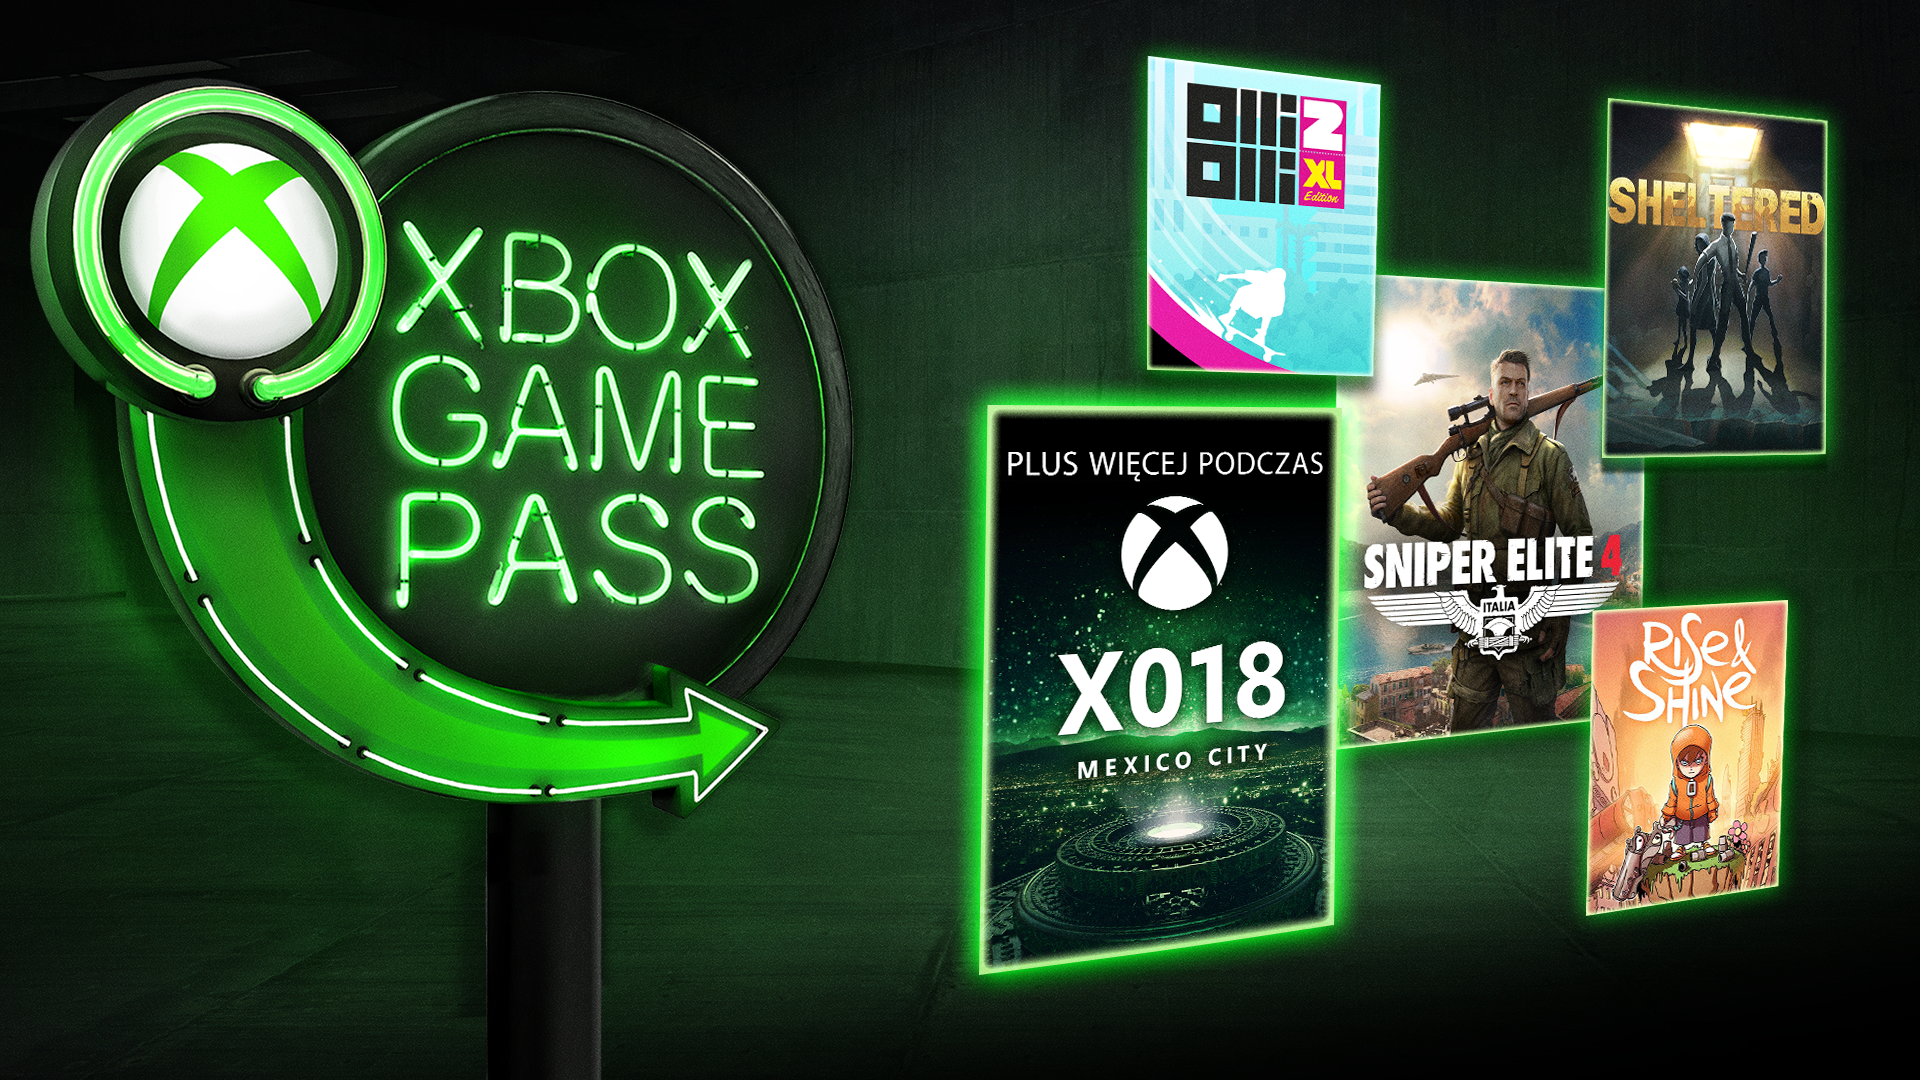 Лучшее в game pass. Xbox game Pass. Карта для активации Xbox game Pass. Карта USA для Xbox game Pass. Карта США для активации Xbox game Pass.